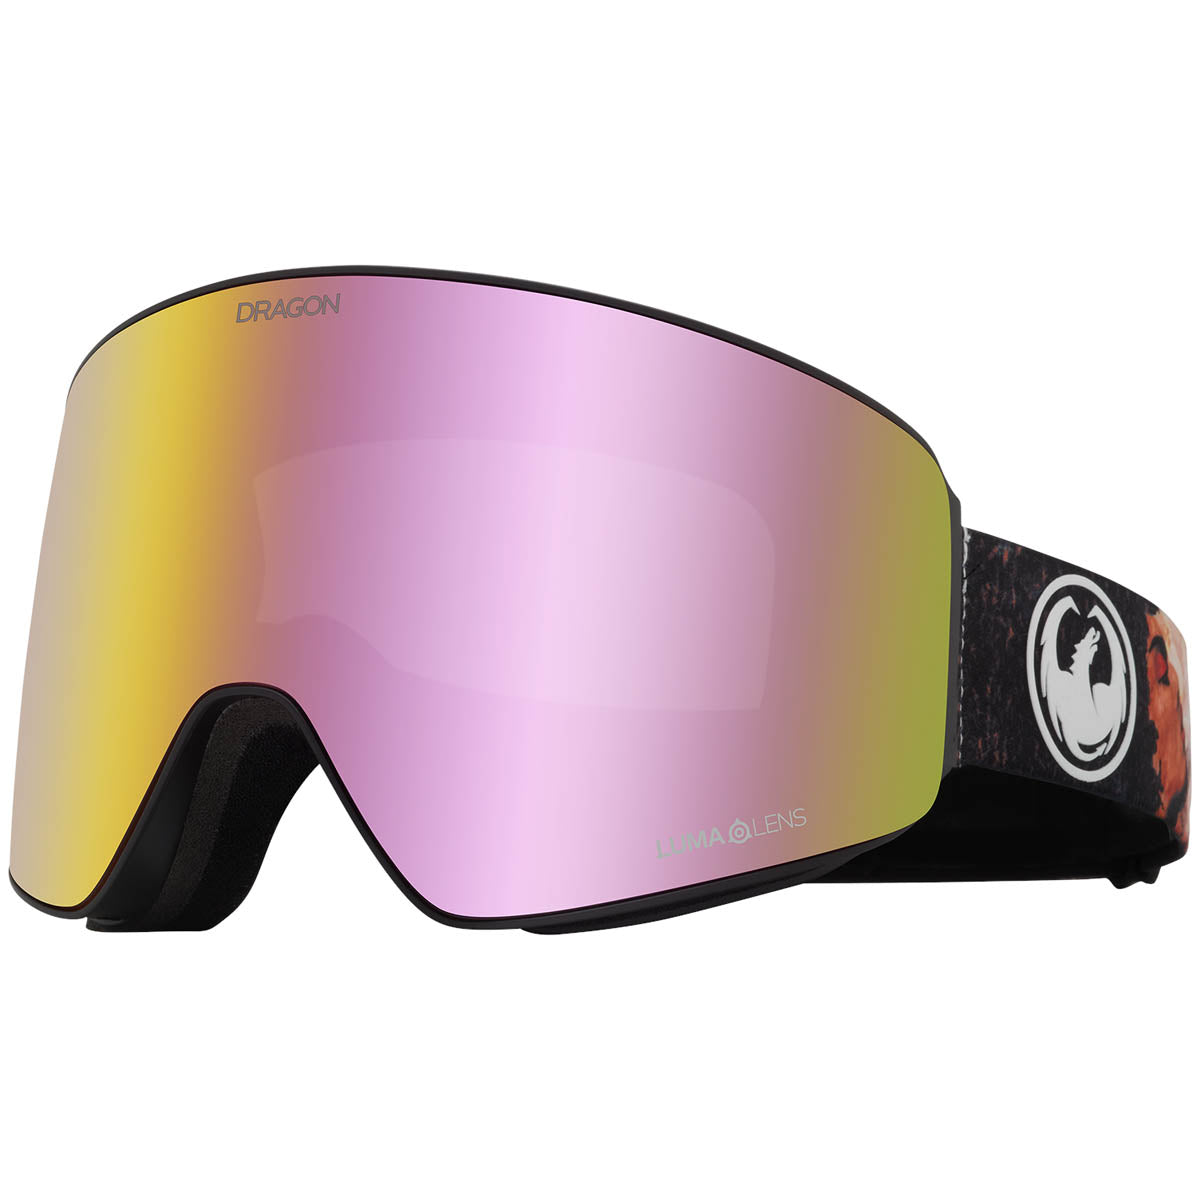 Dragon Pxv Snowboard Goggles - Ranalter/Lumalens Pink Ion image 1